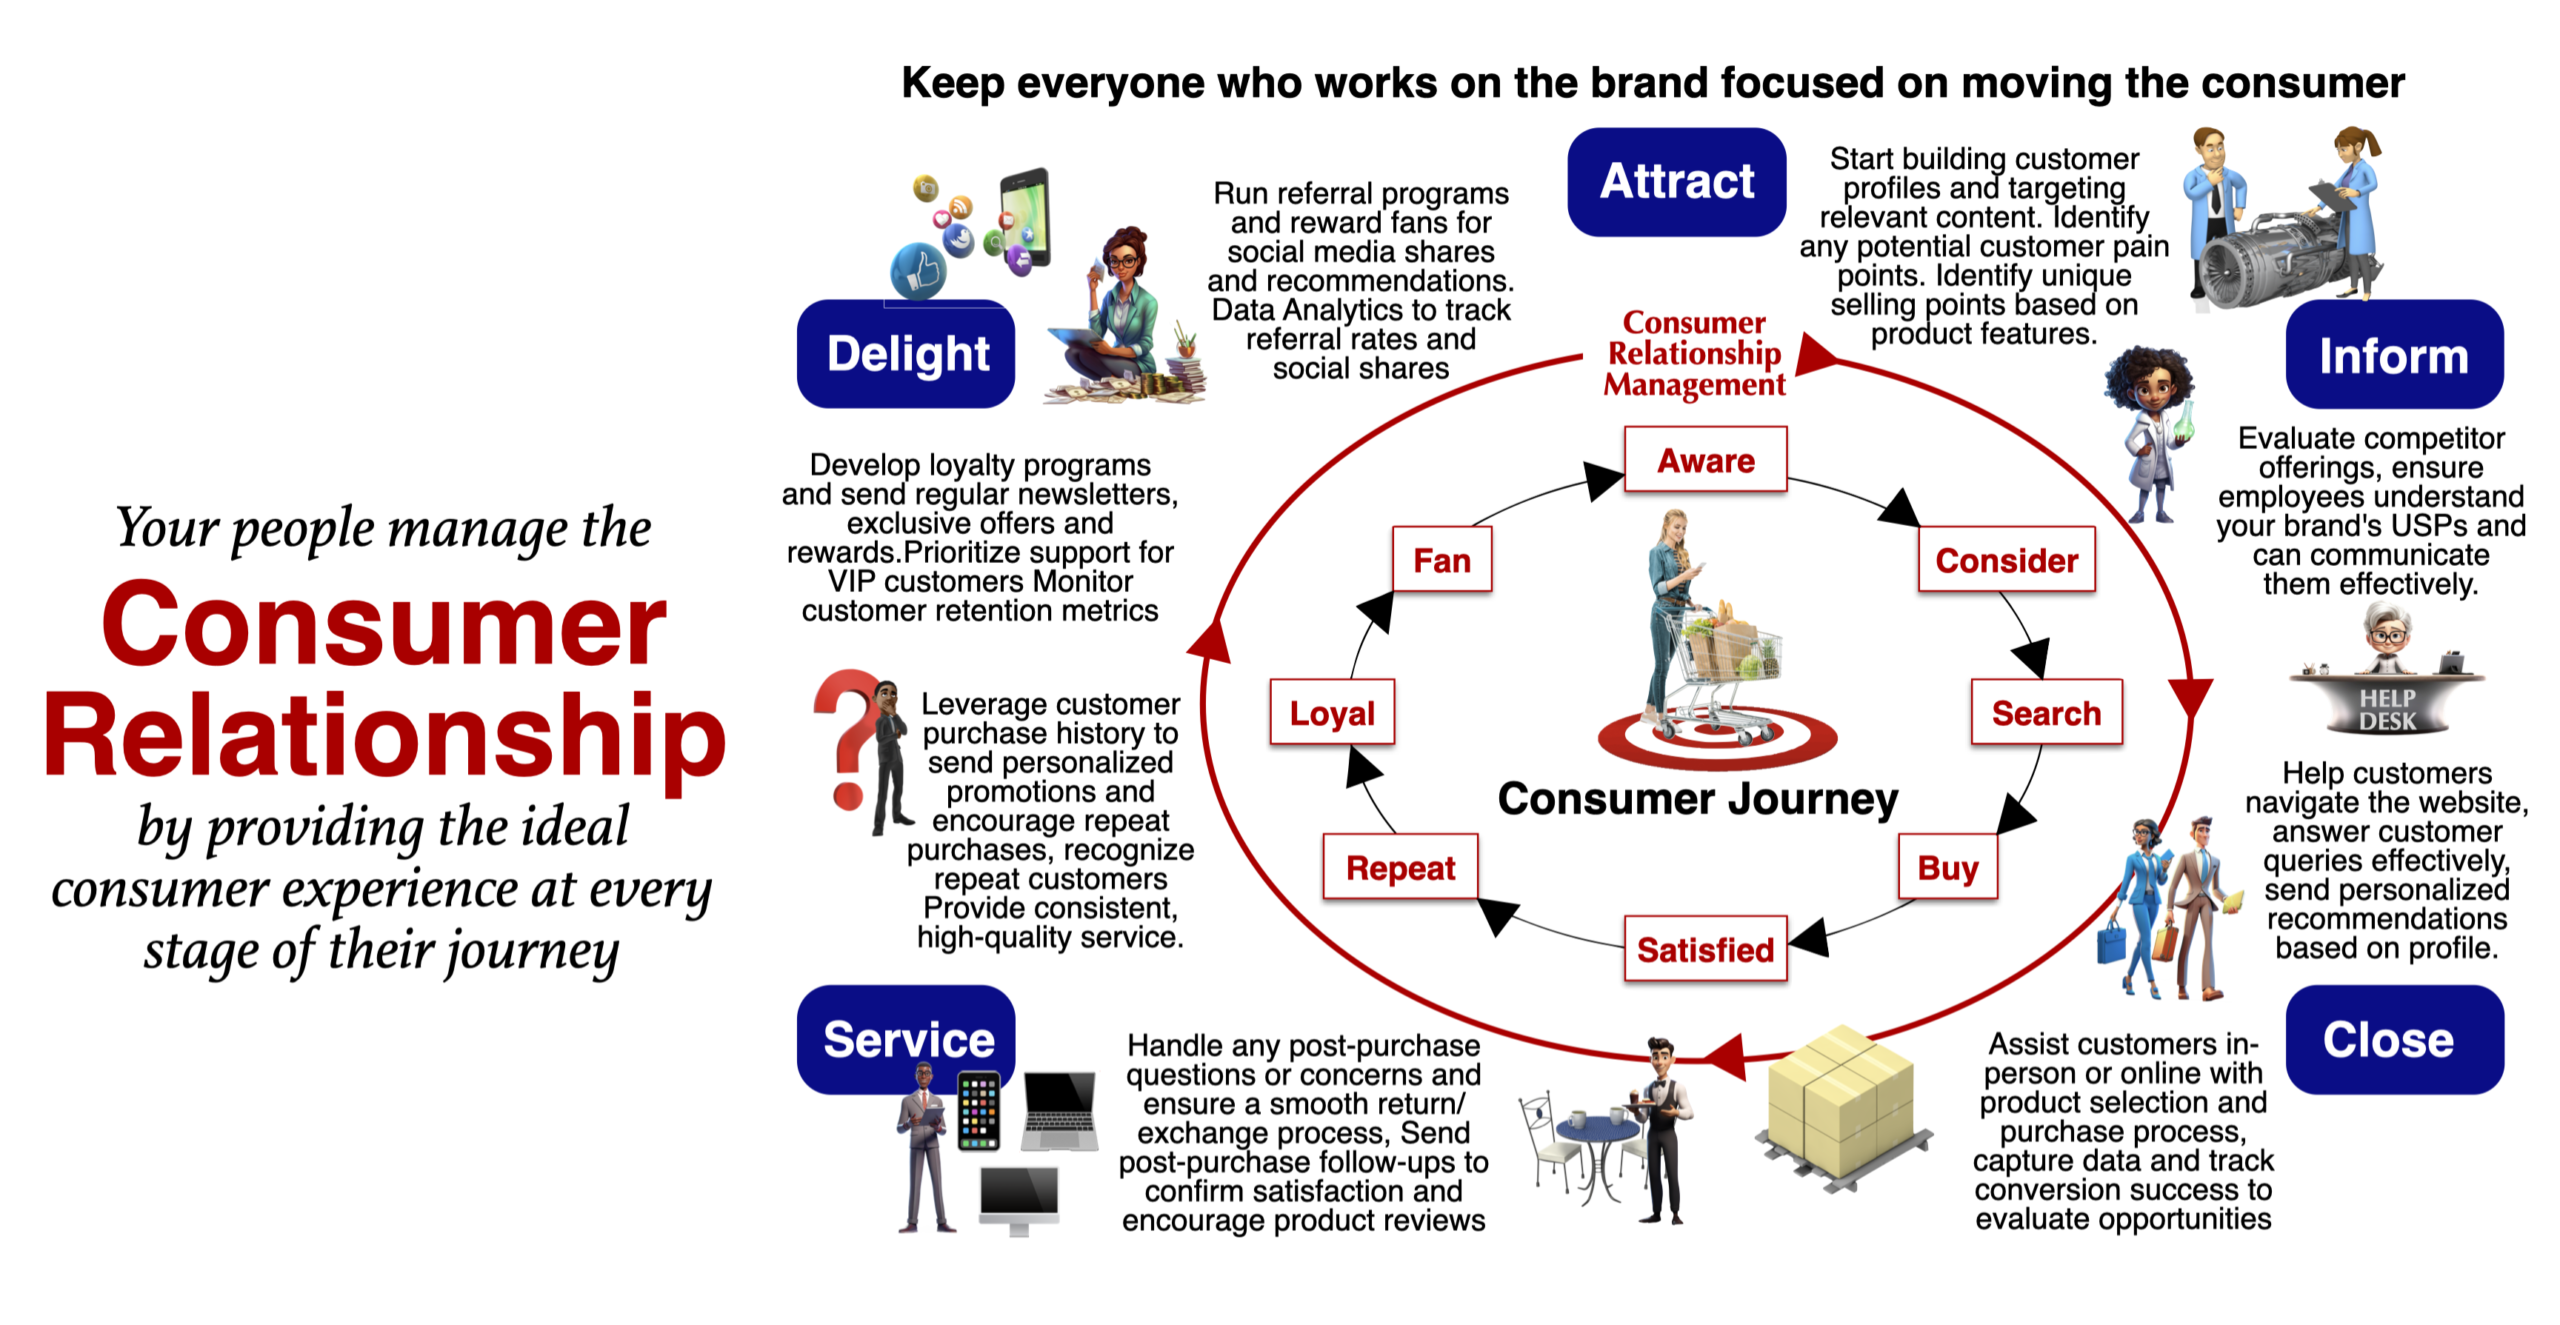 Consumer Relationship OmniChannel Media and OmniChannel Marketing